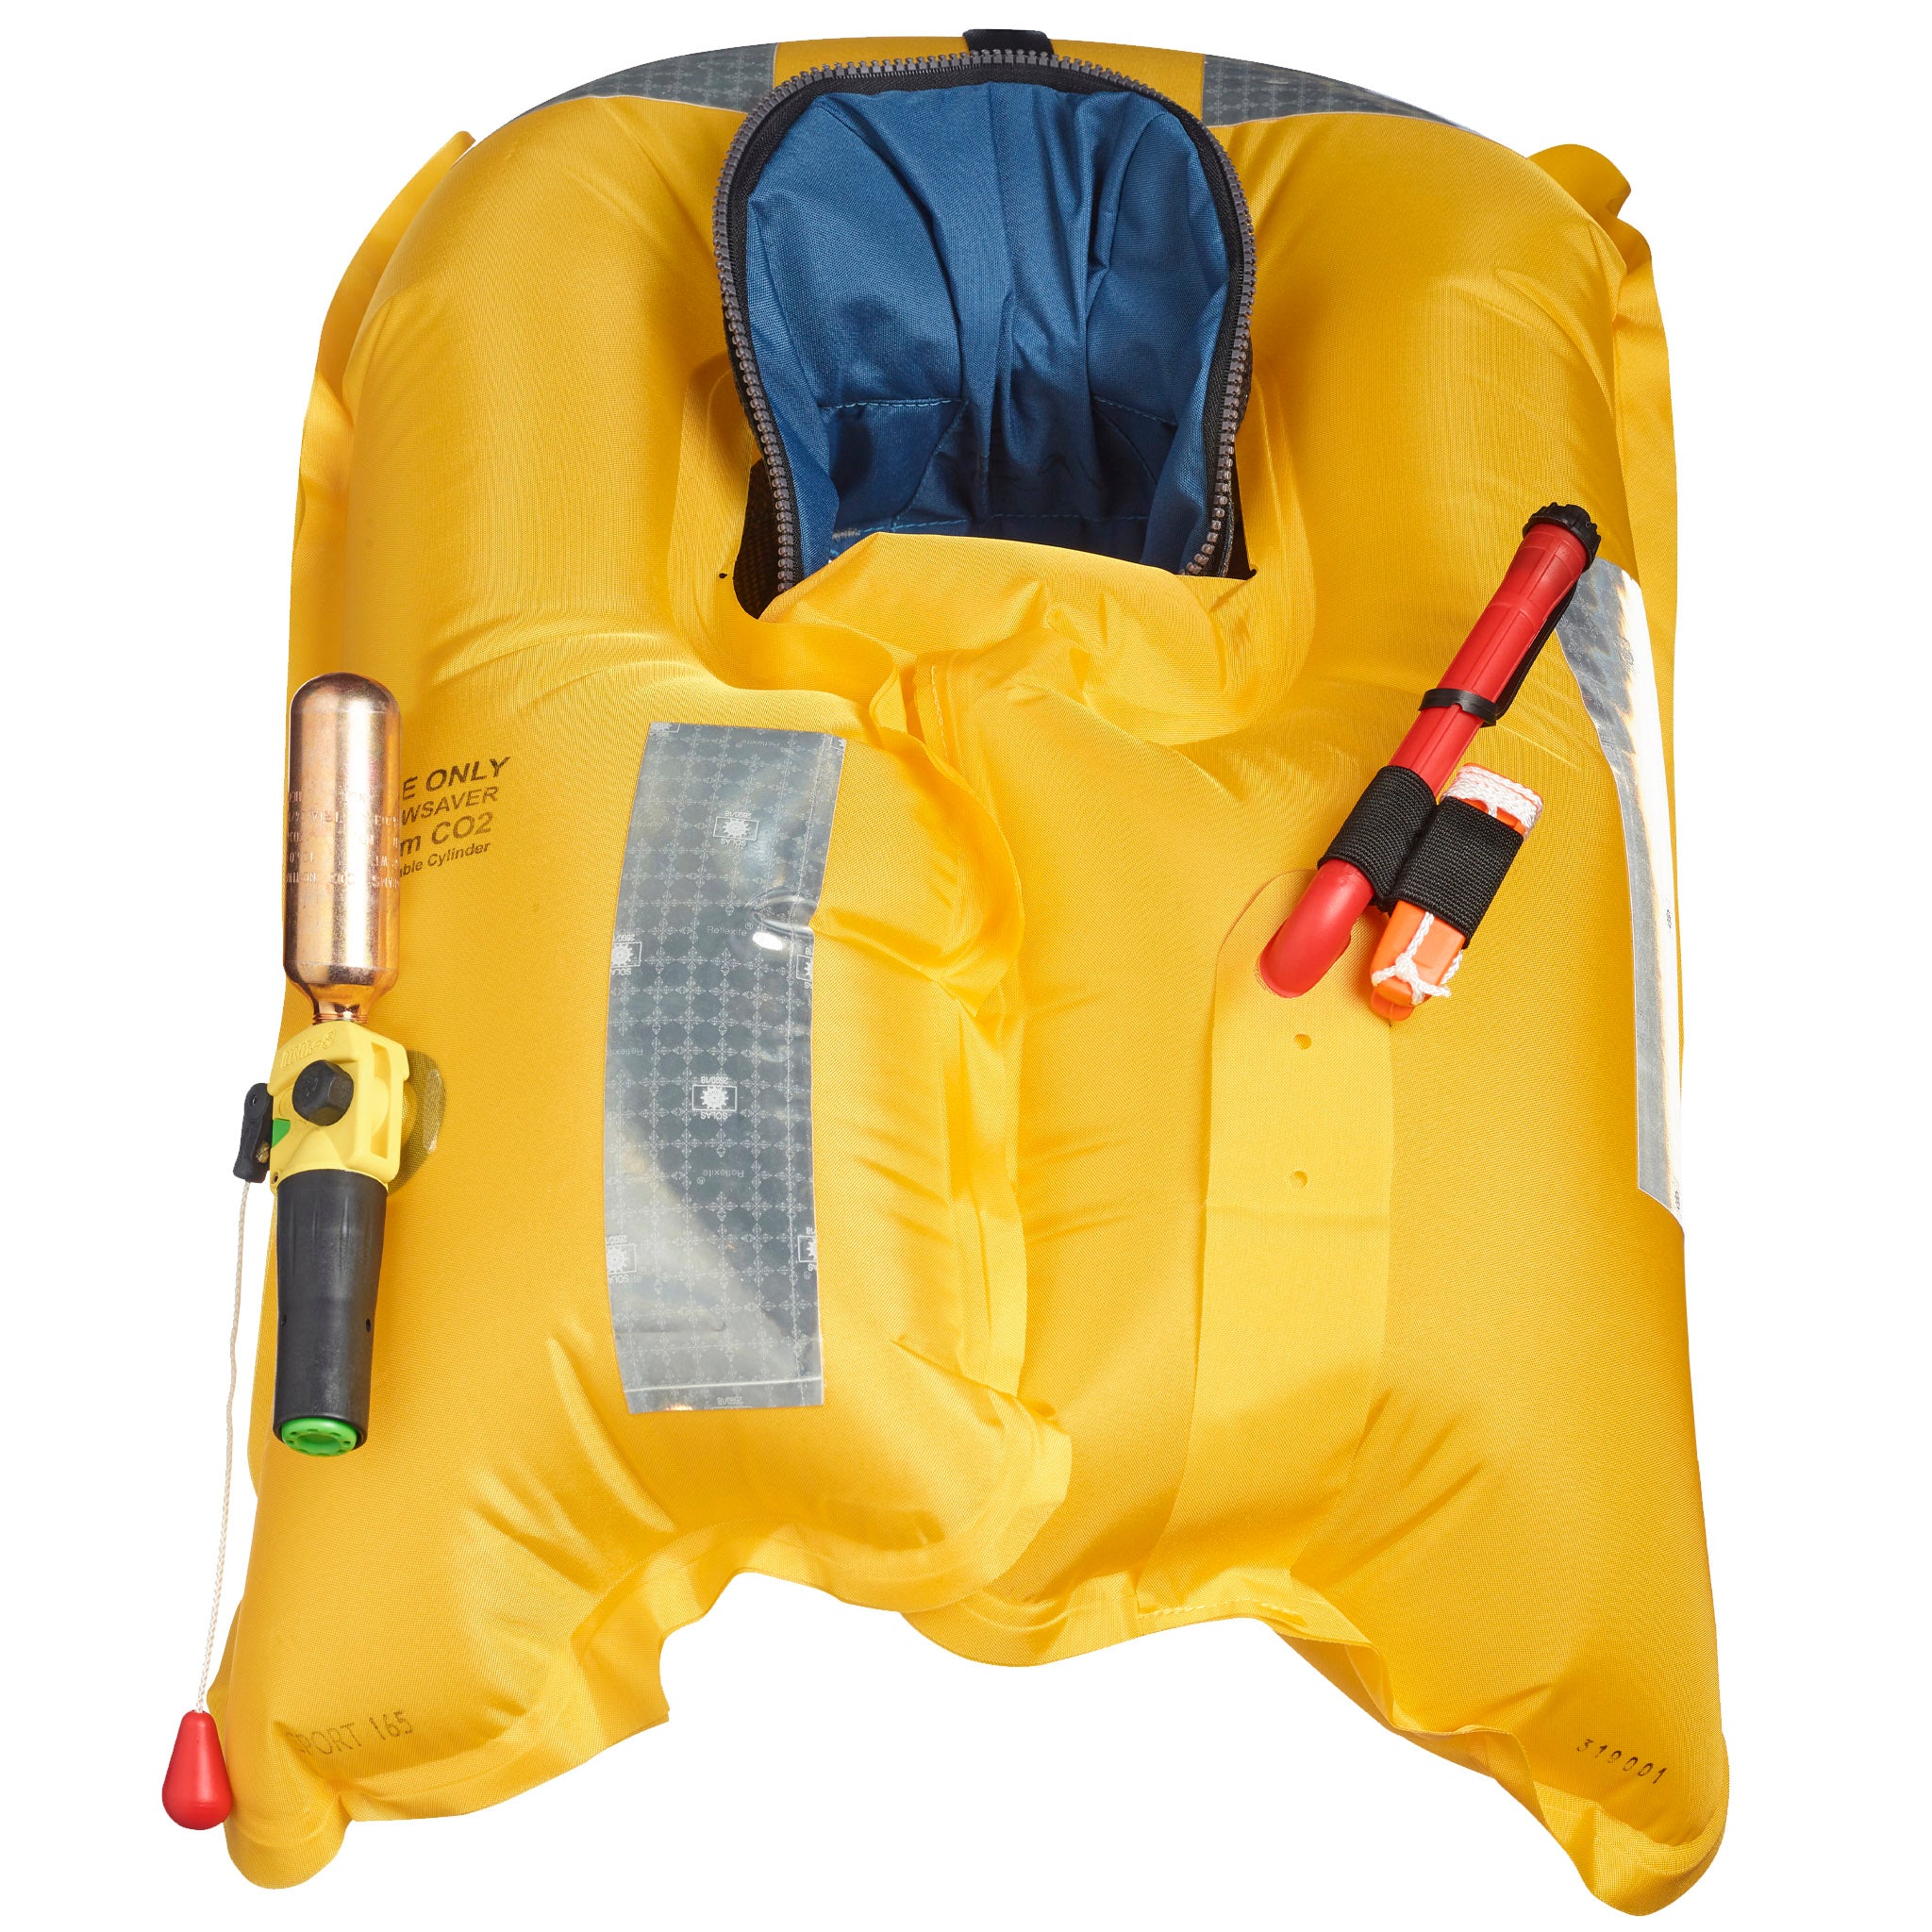 Crewsaver Crewfit 165N Sport Lifejacket Inflated - Inside